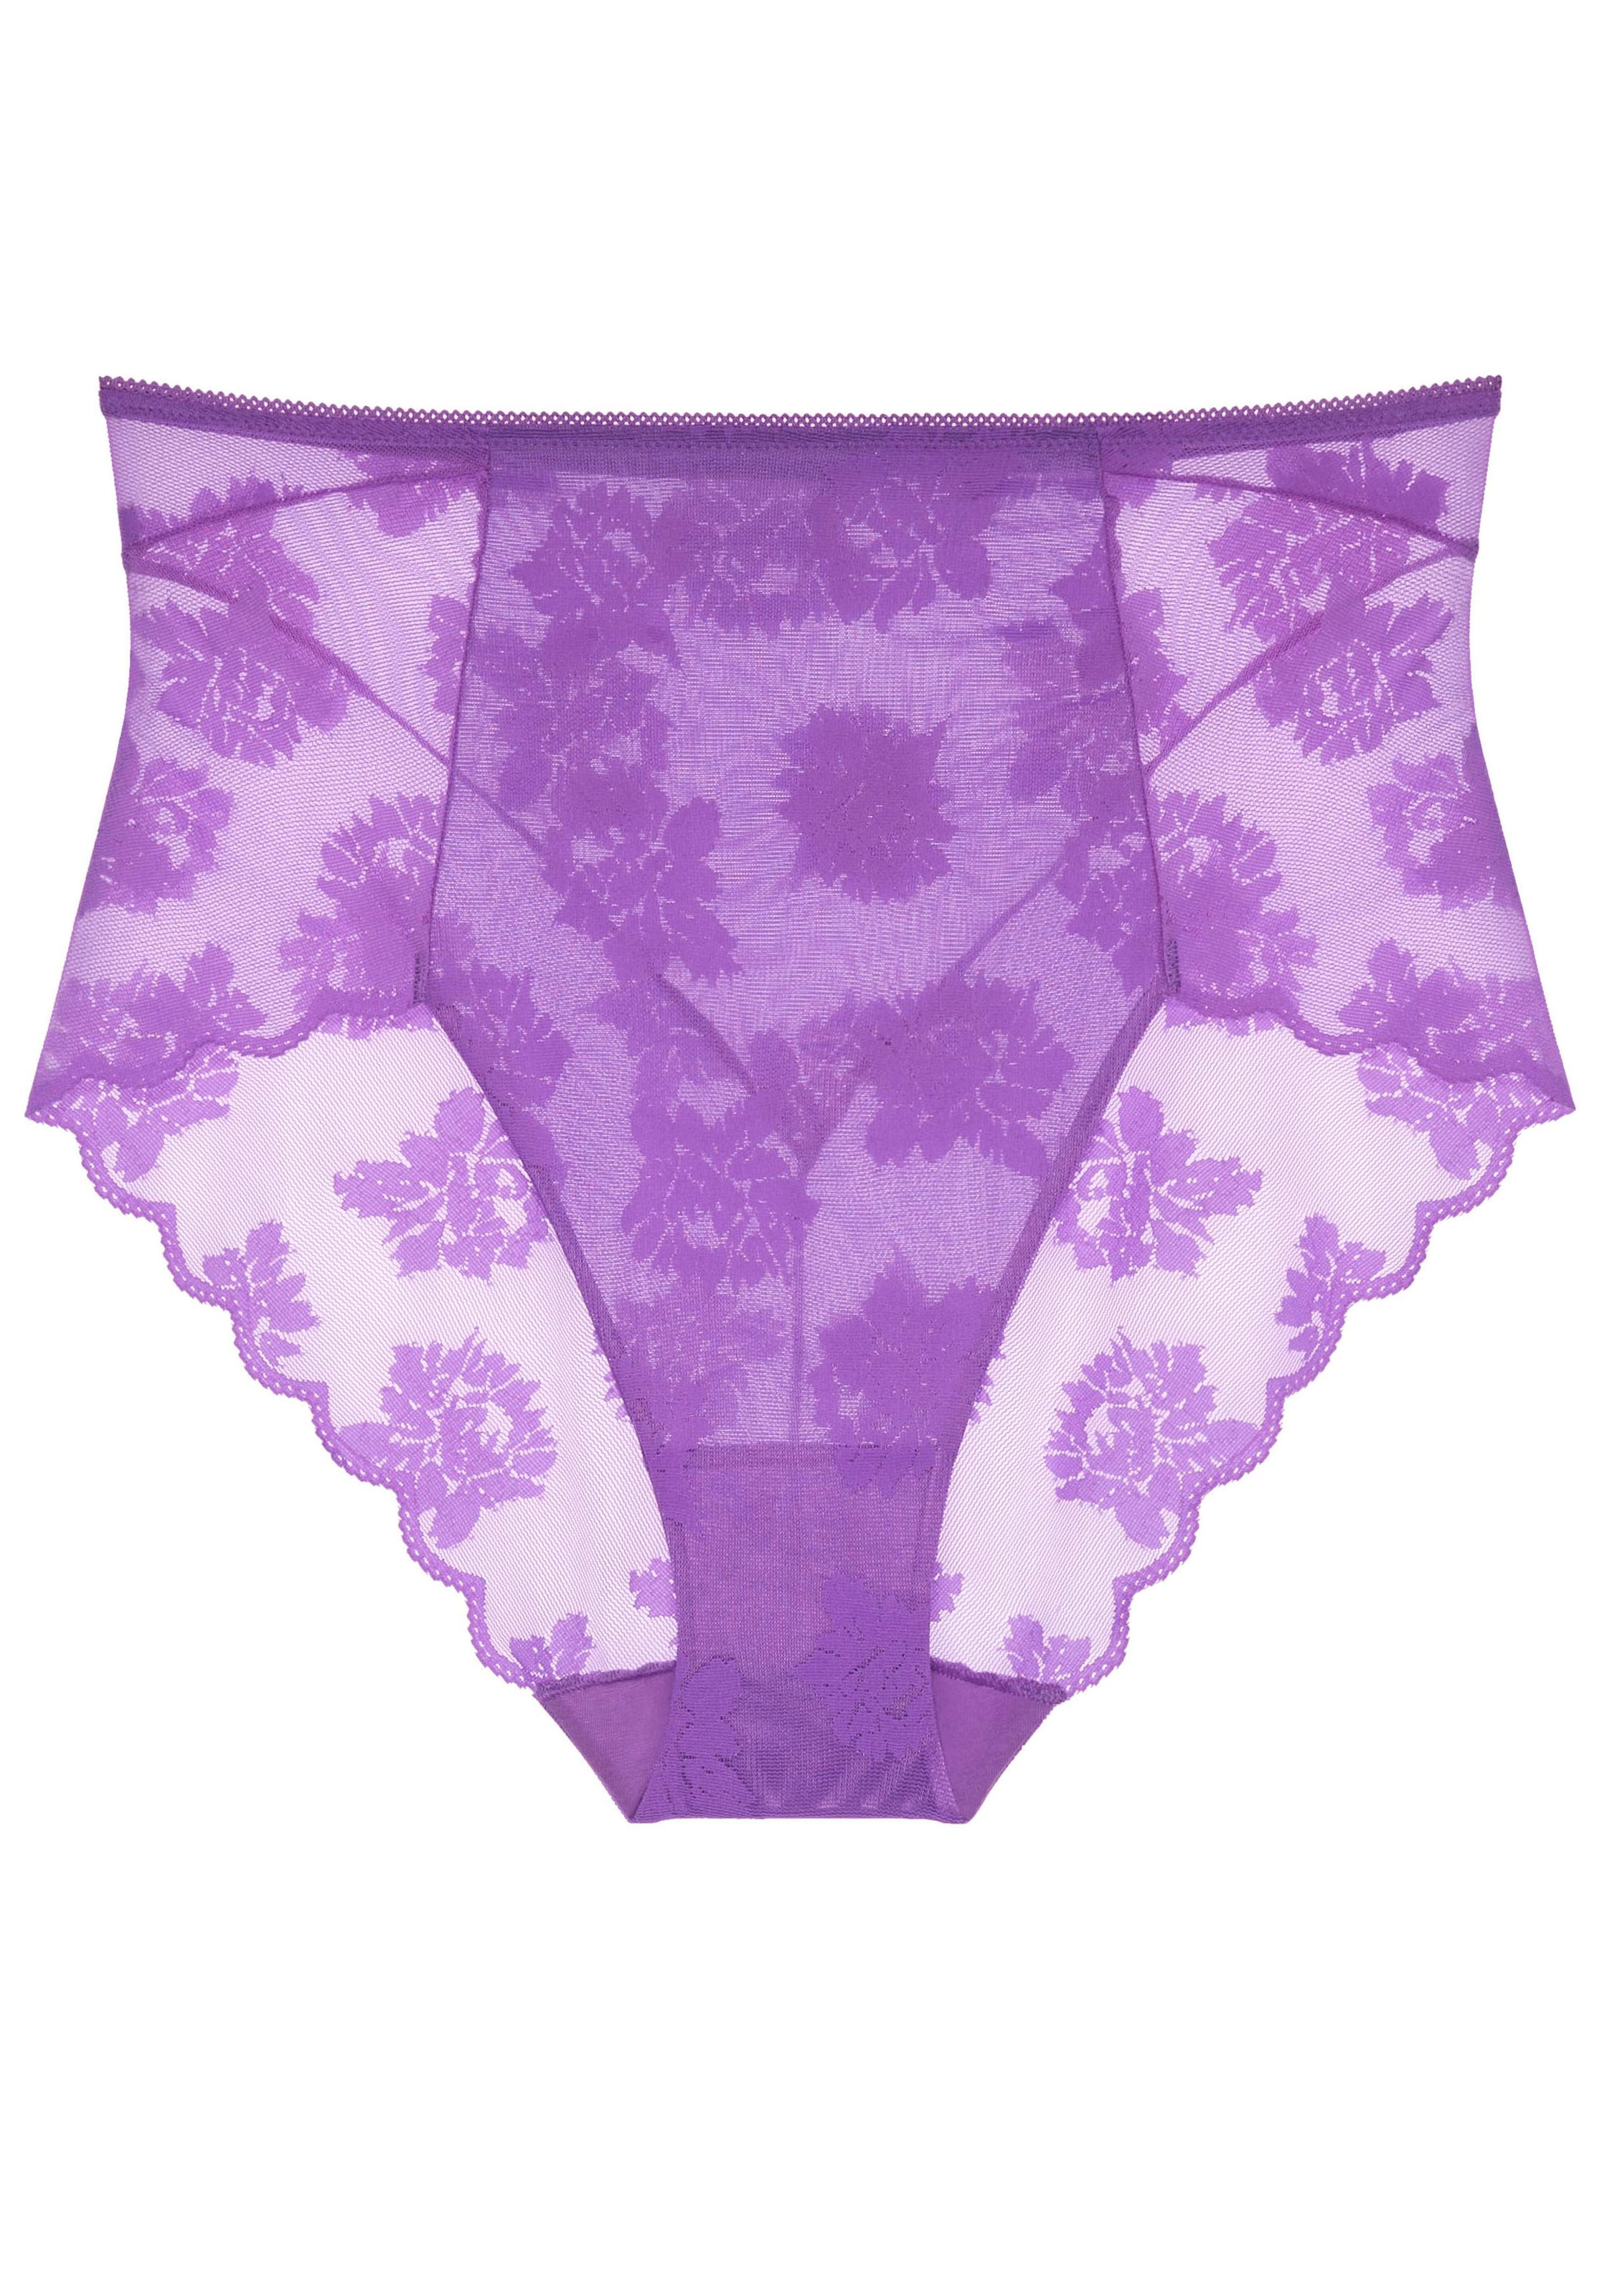 Triumph High-Waist-Panty »Amourette 300 Summer«, florales Design Hoher Beinausschnitt, bei ♕